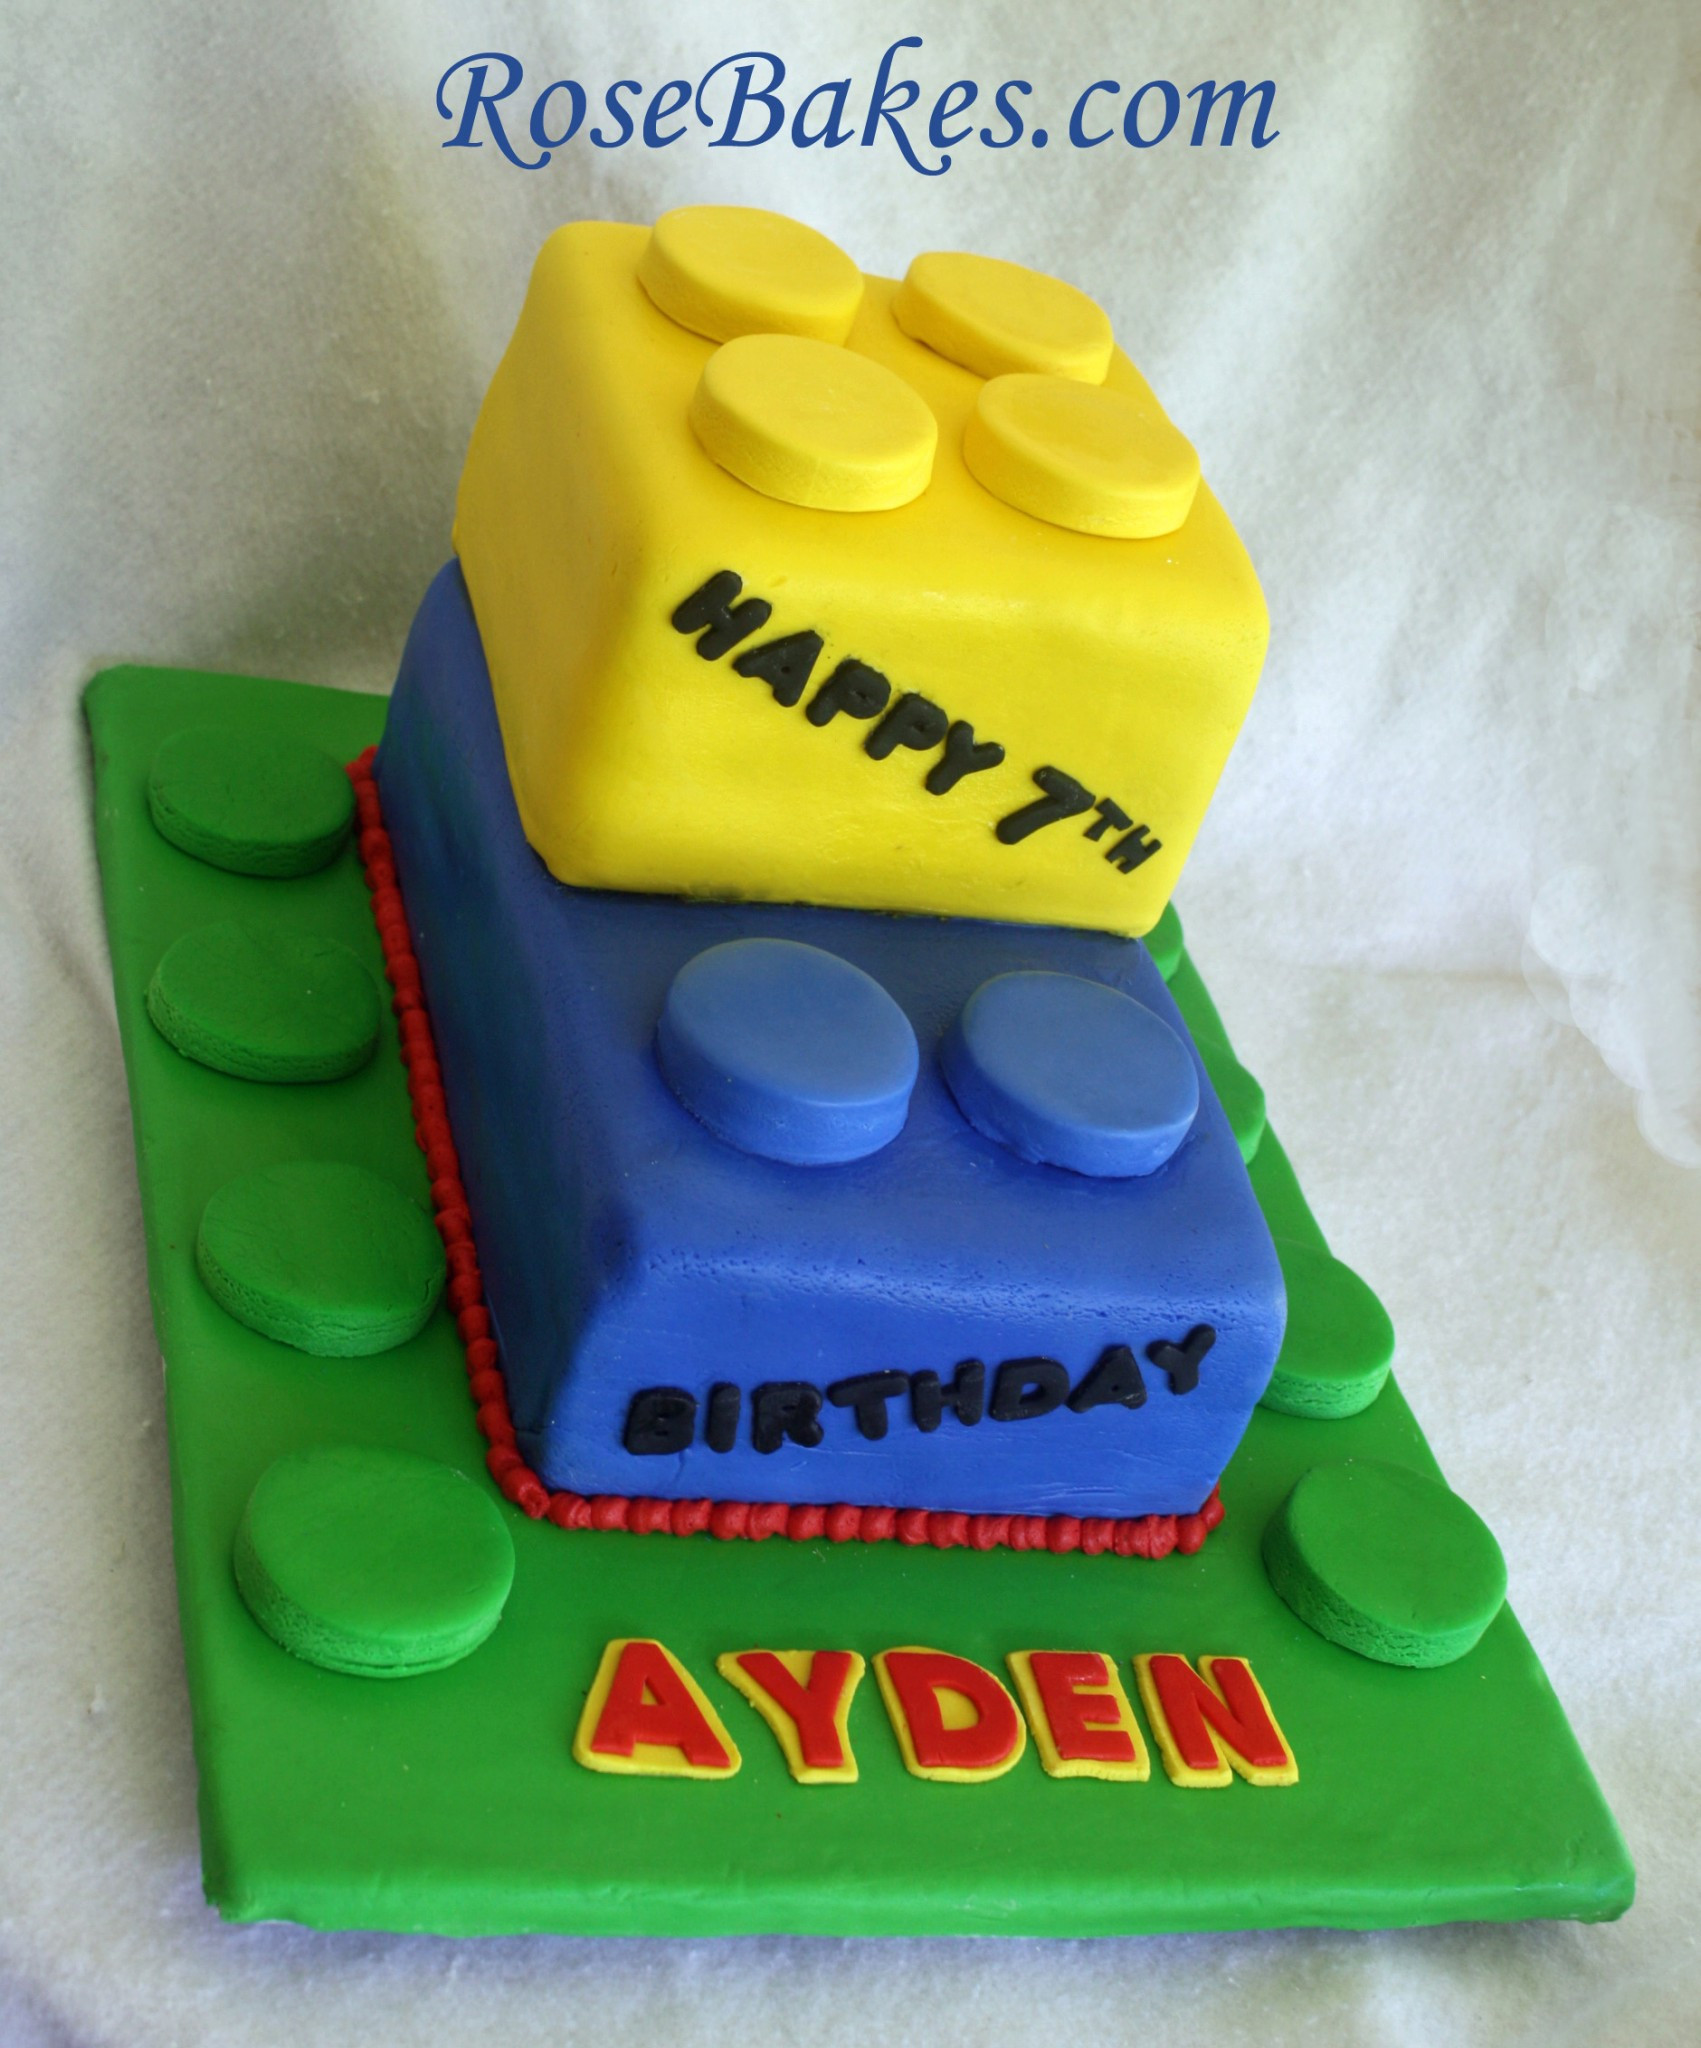 Best ideas about Lego Birthday Cake
. Save or Pin Legos Birthday Cake Now.